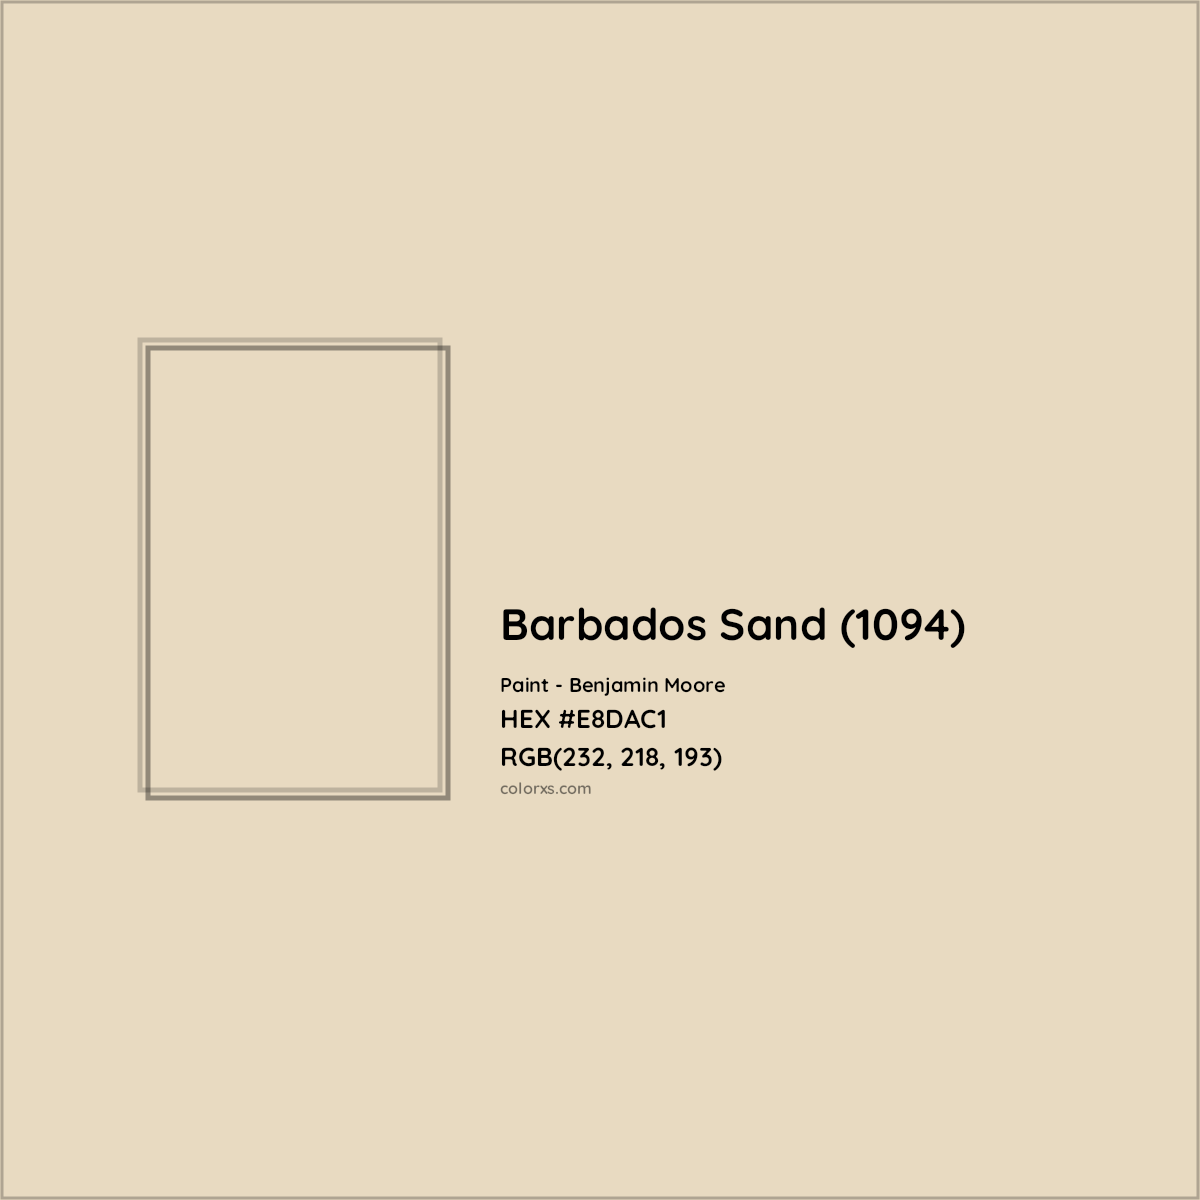 HEX #E8DAC1 Barbados Sand (1094) Paint Benjamin Moore - Color Code